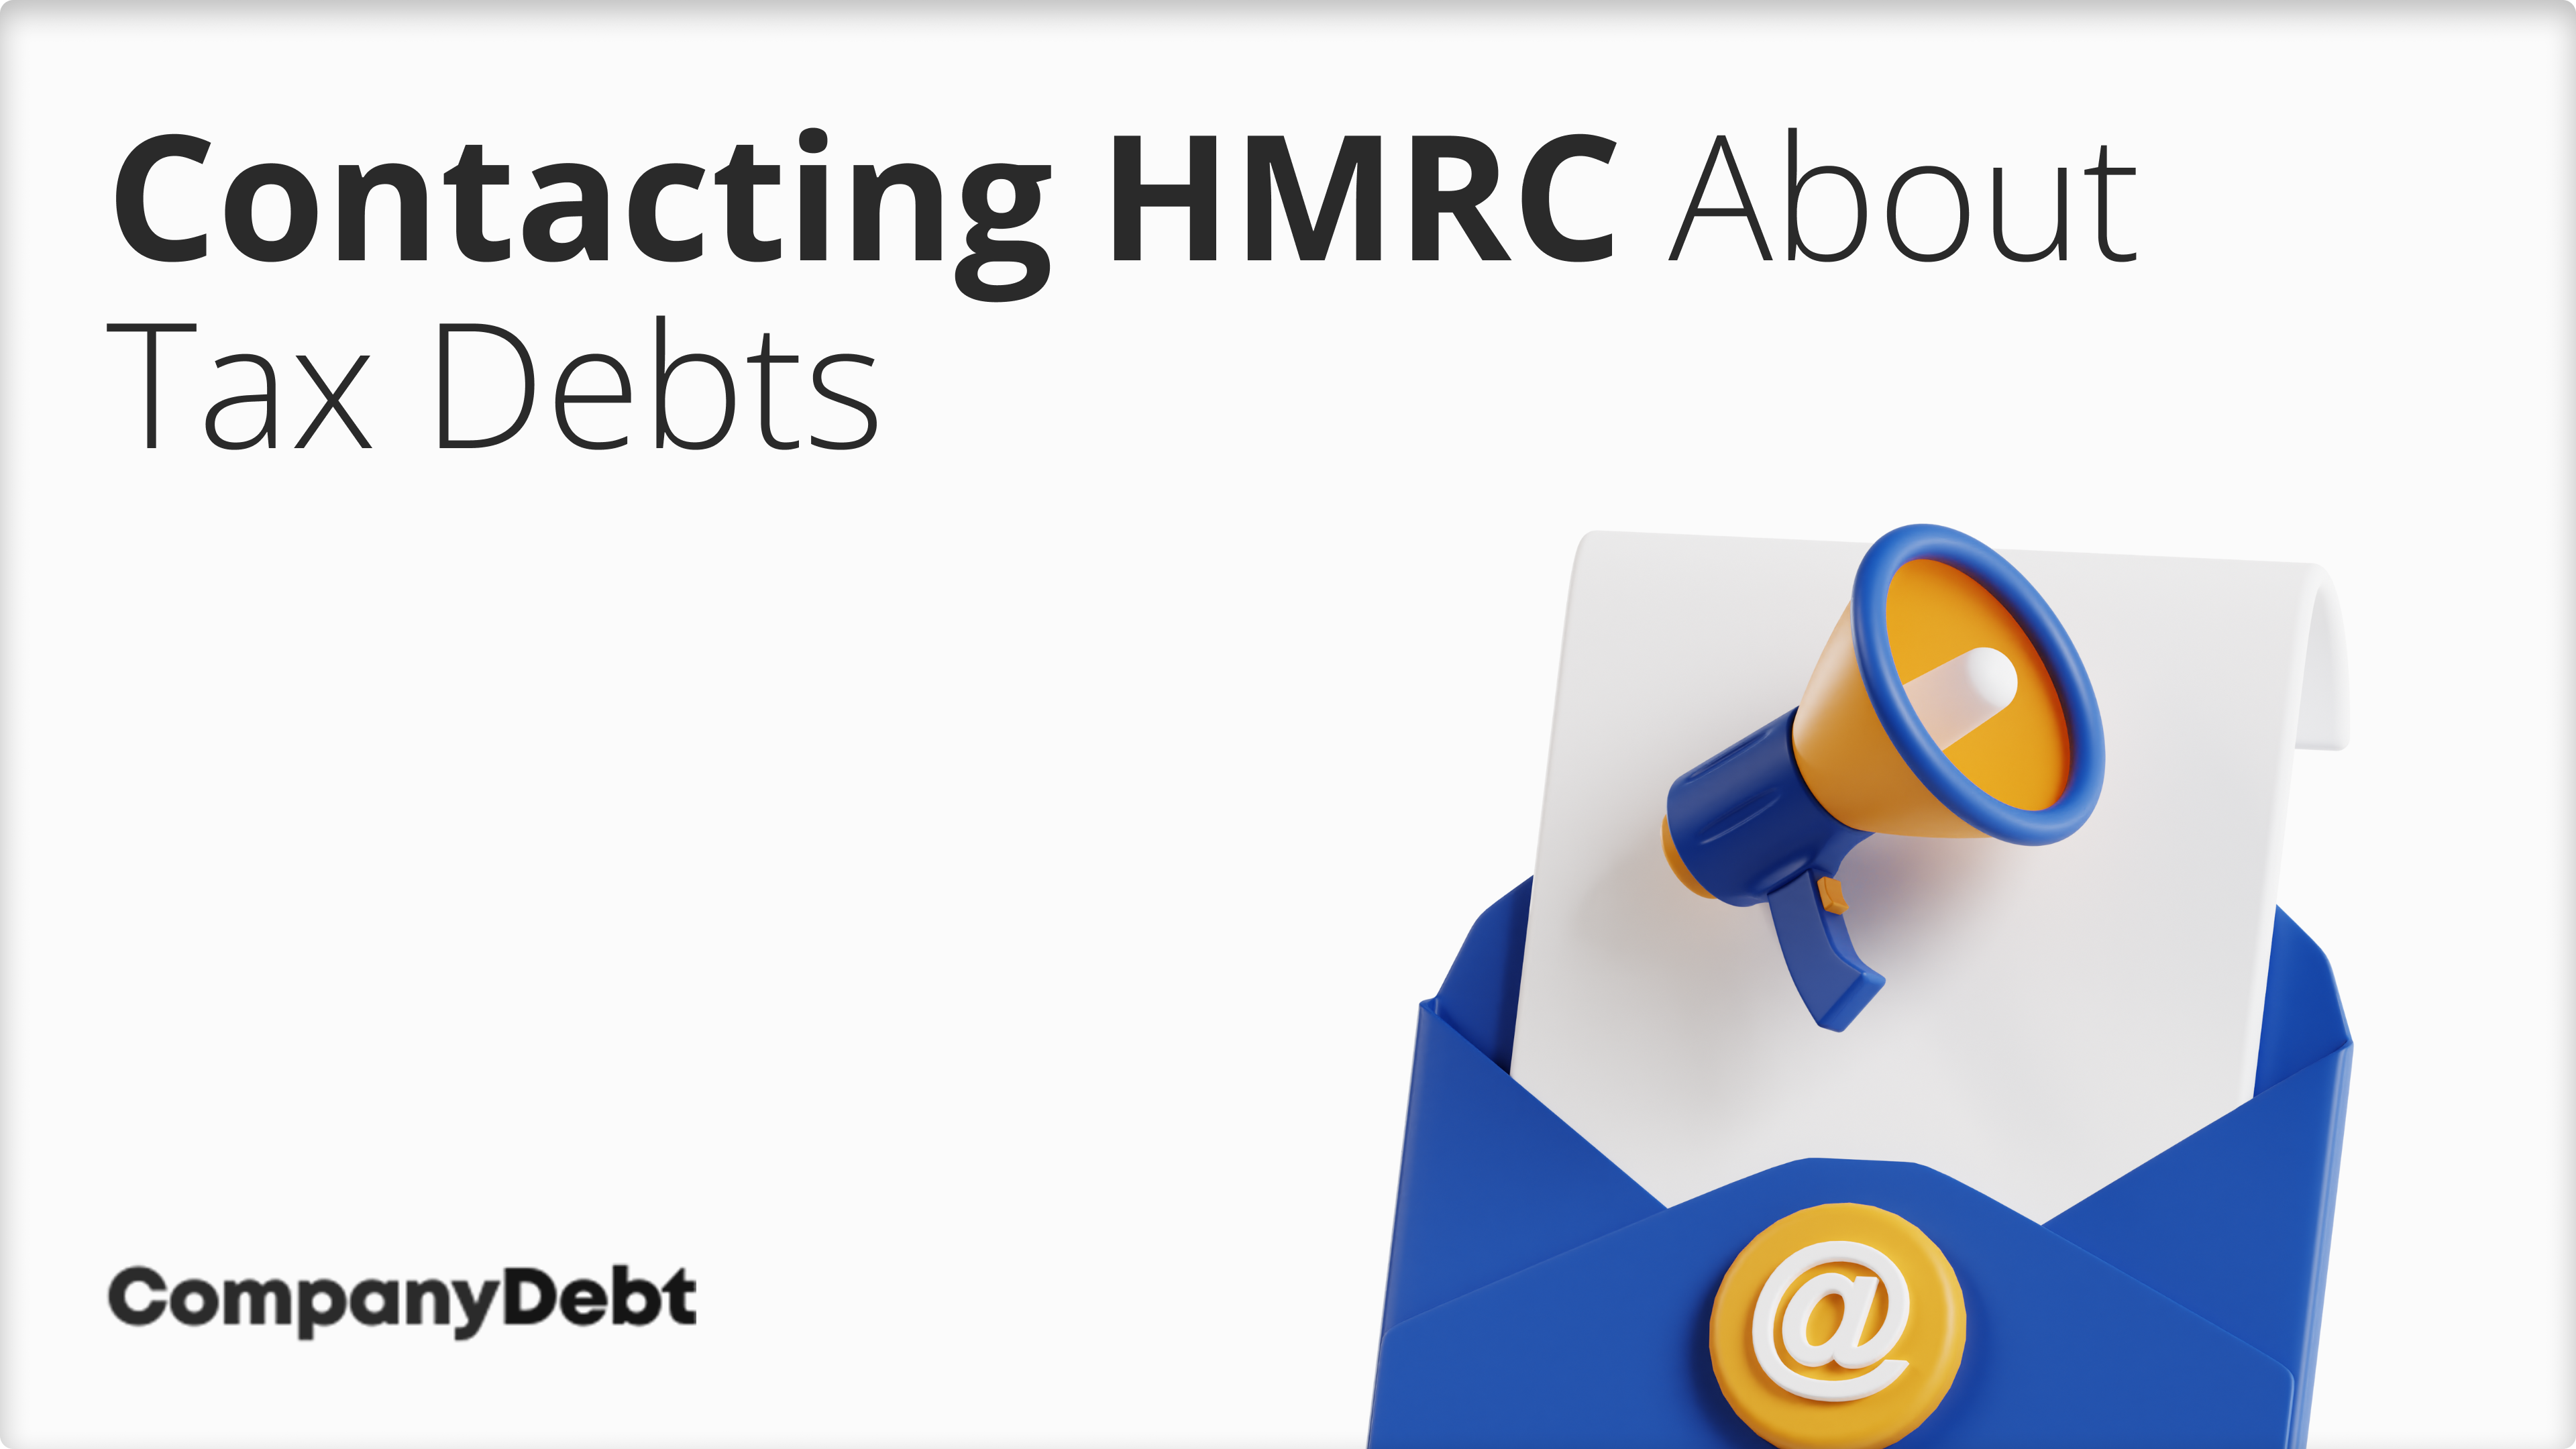 HMRC Debt Management - Contacting HMRC About Tax Debts